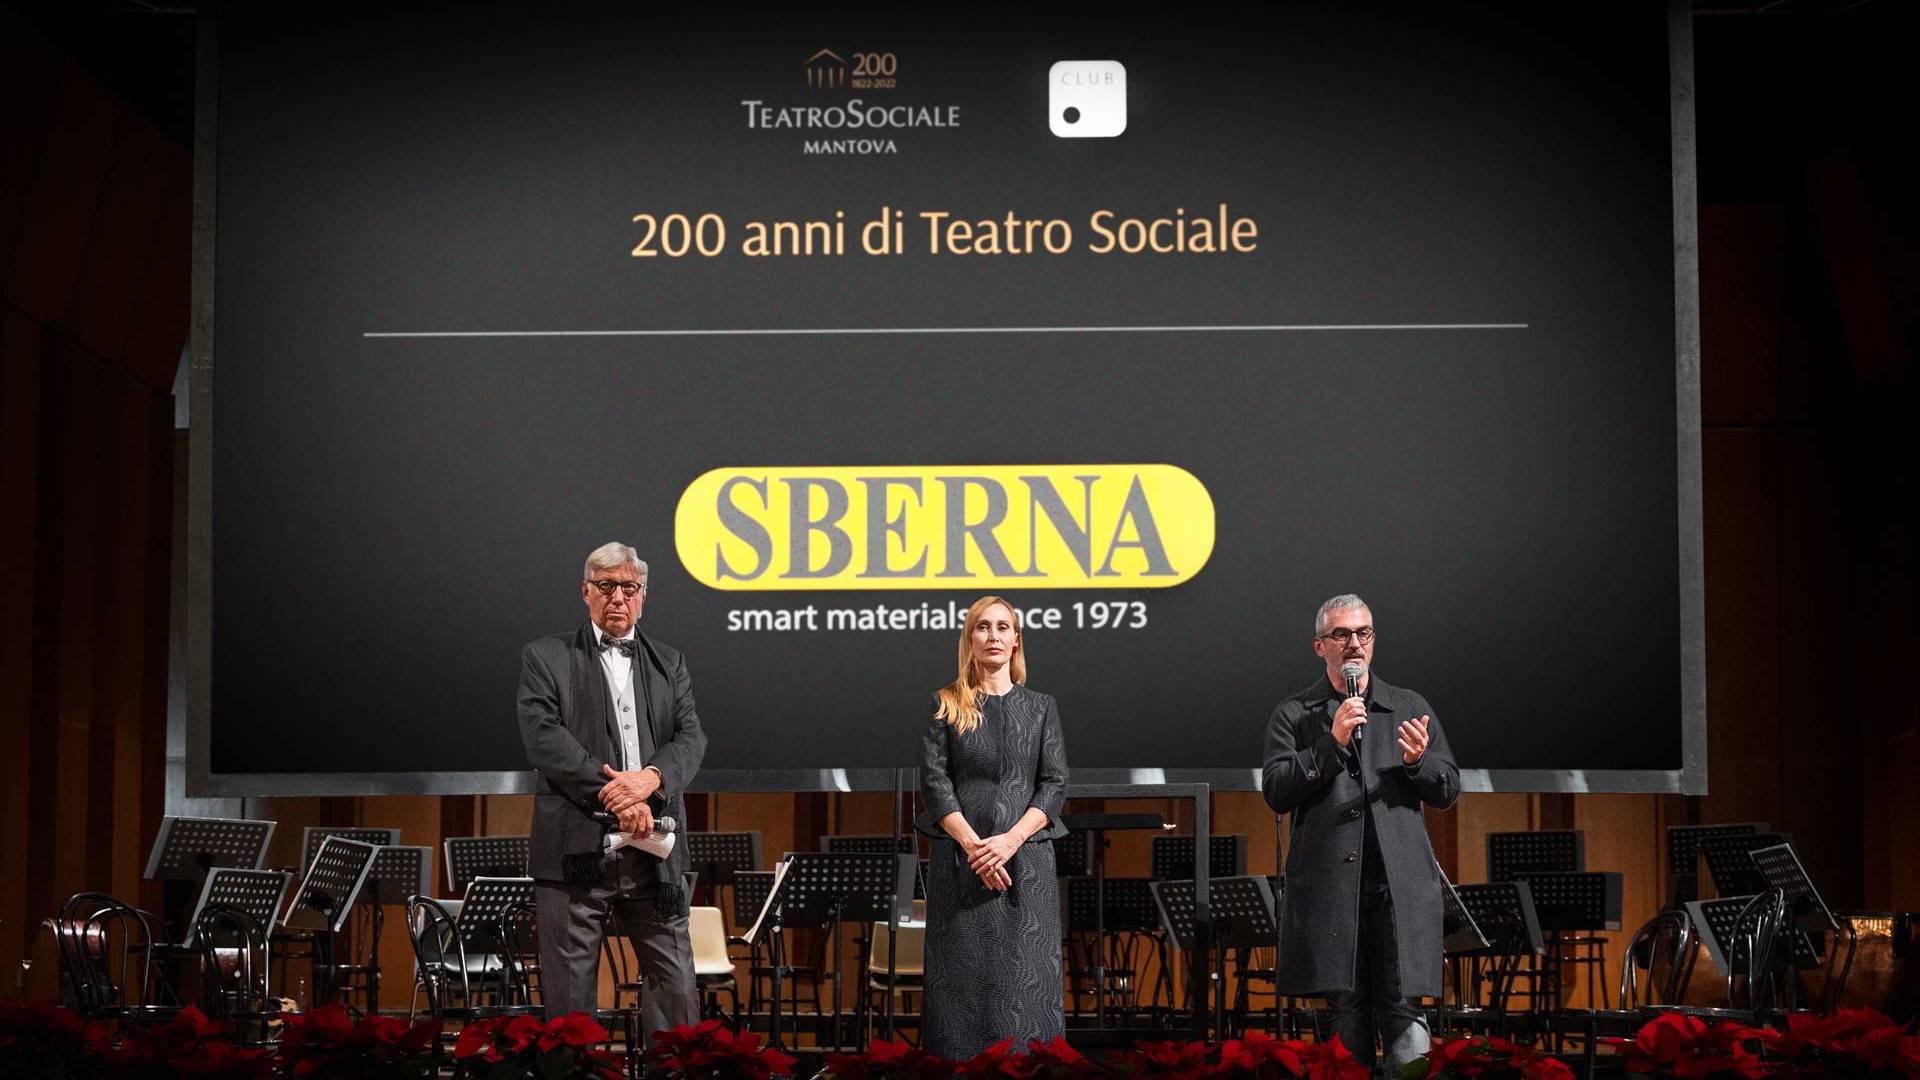 Teatro Sociale Mantova<br> Bicentenary Celebration